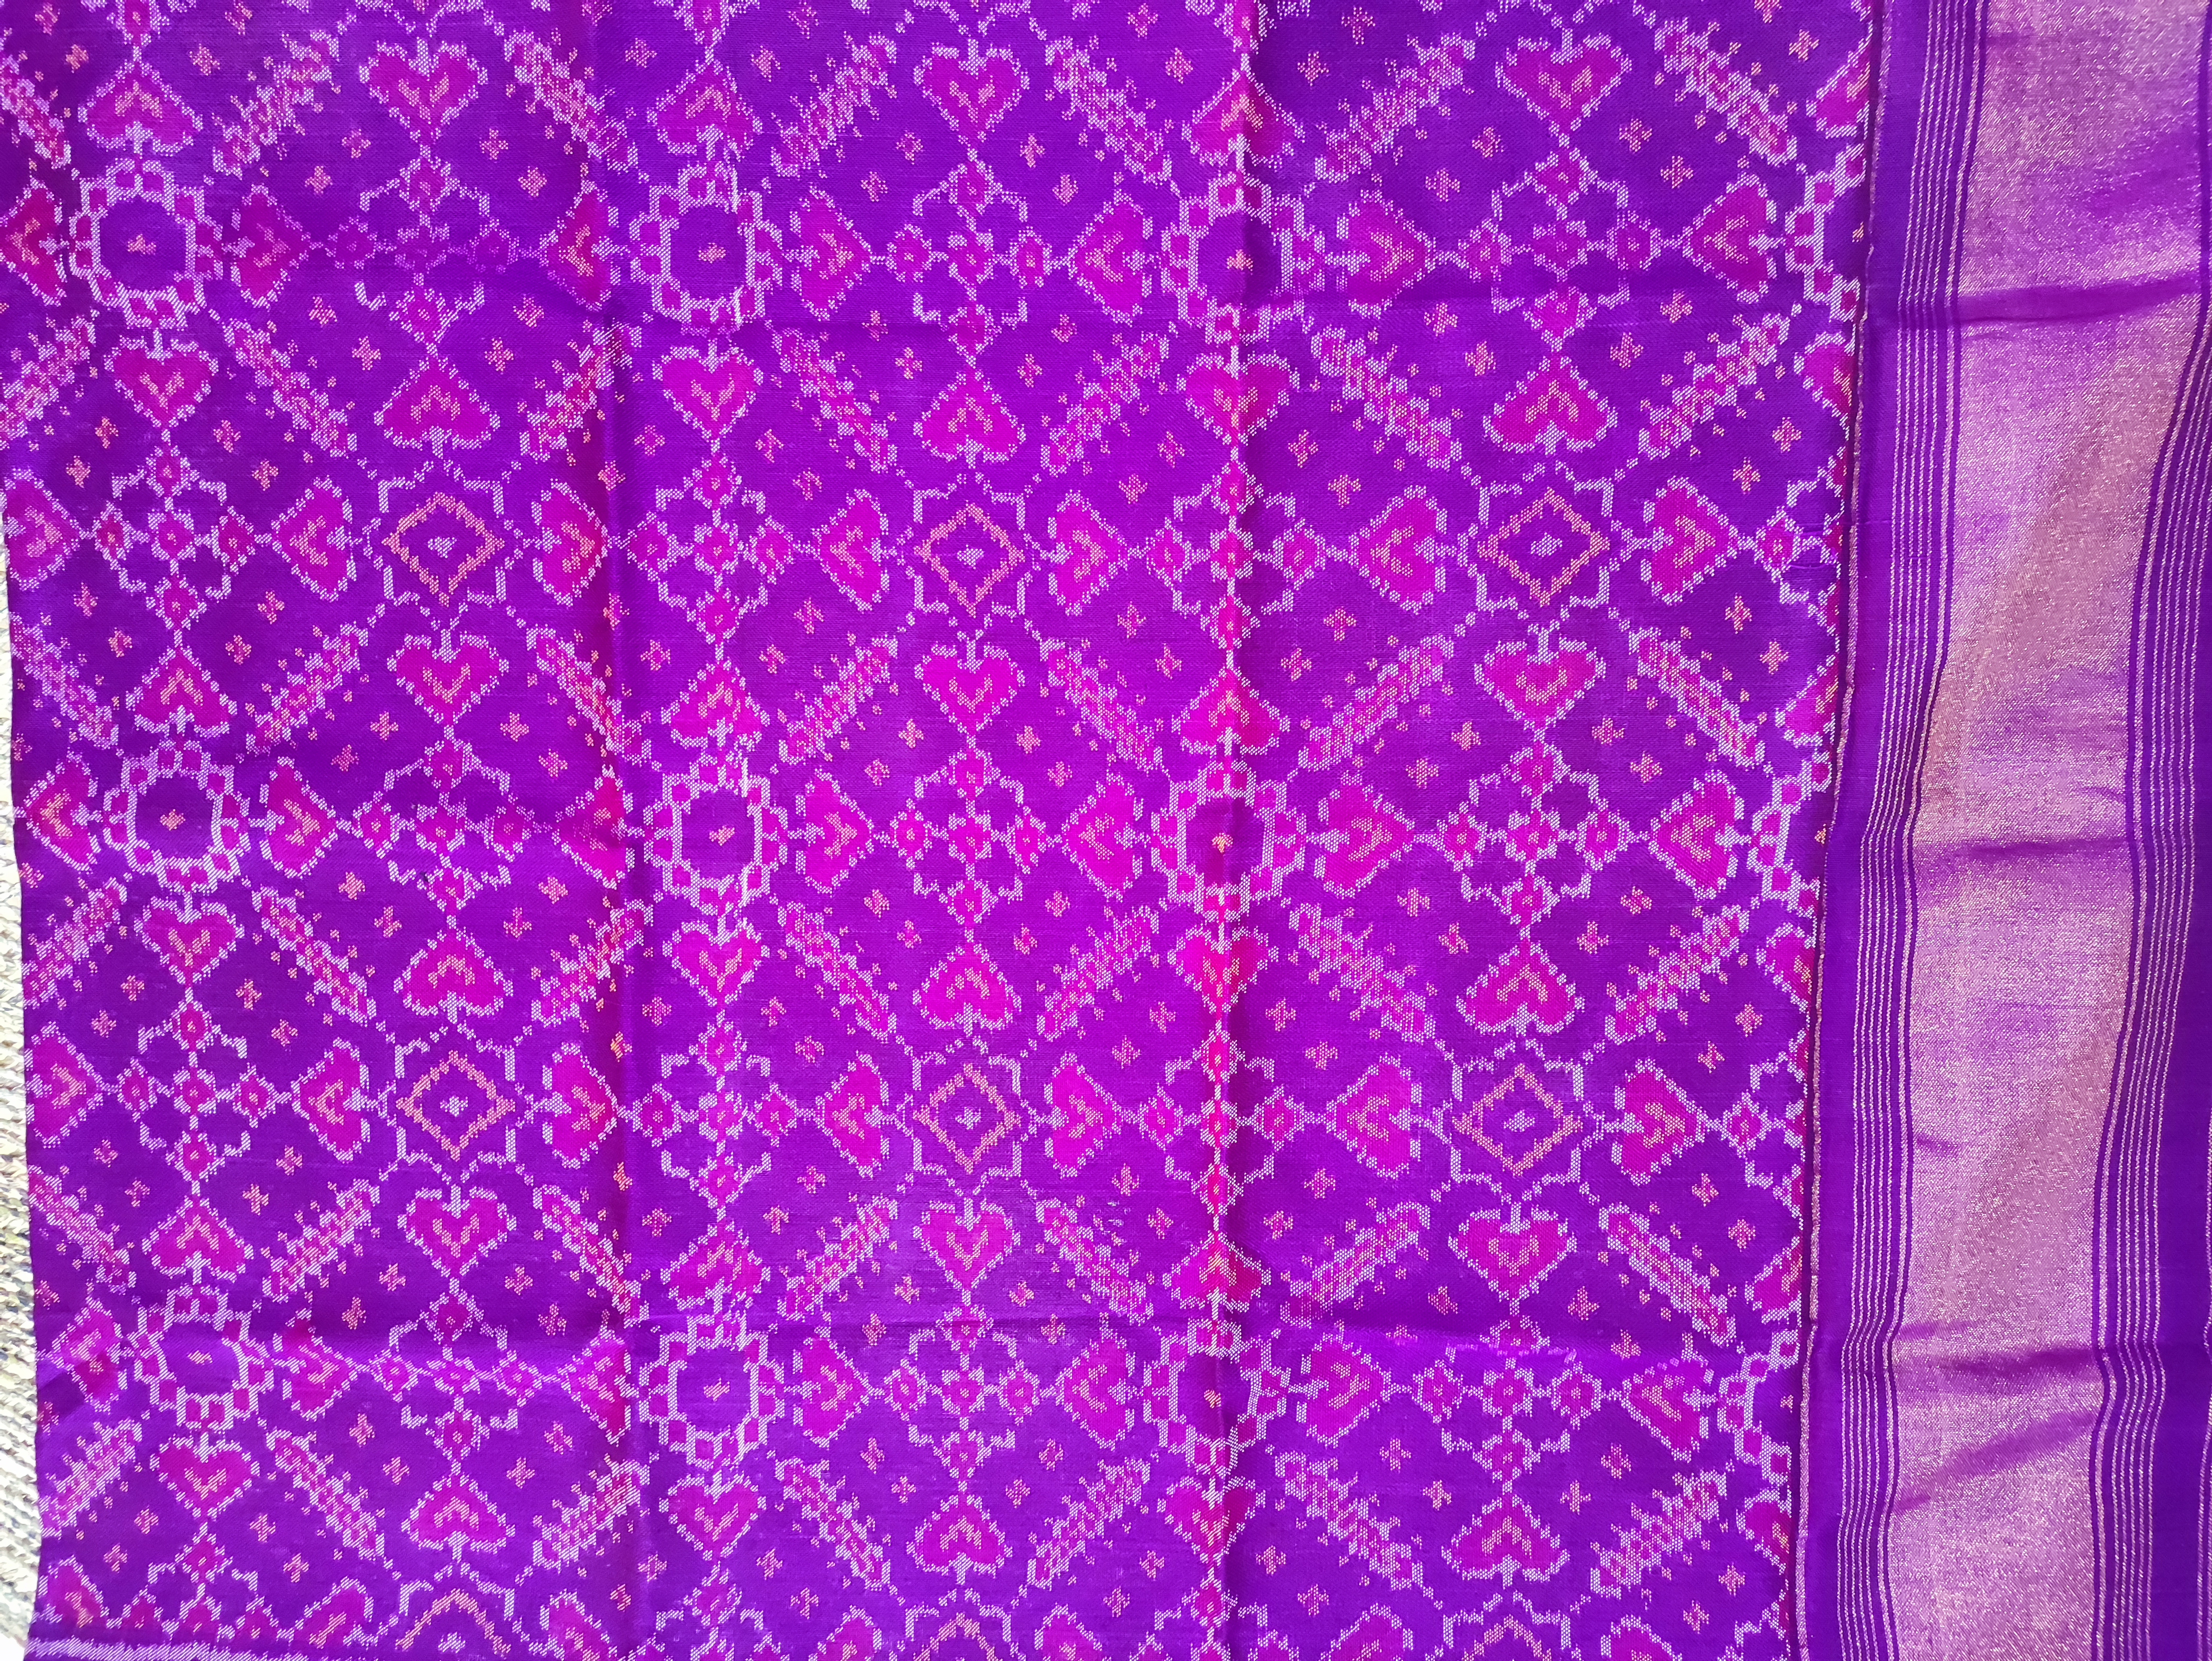 Patola shawl uploaded by Dipak patola art on 1/8/2022